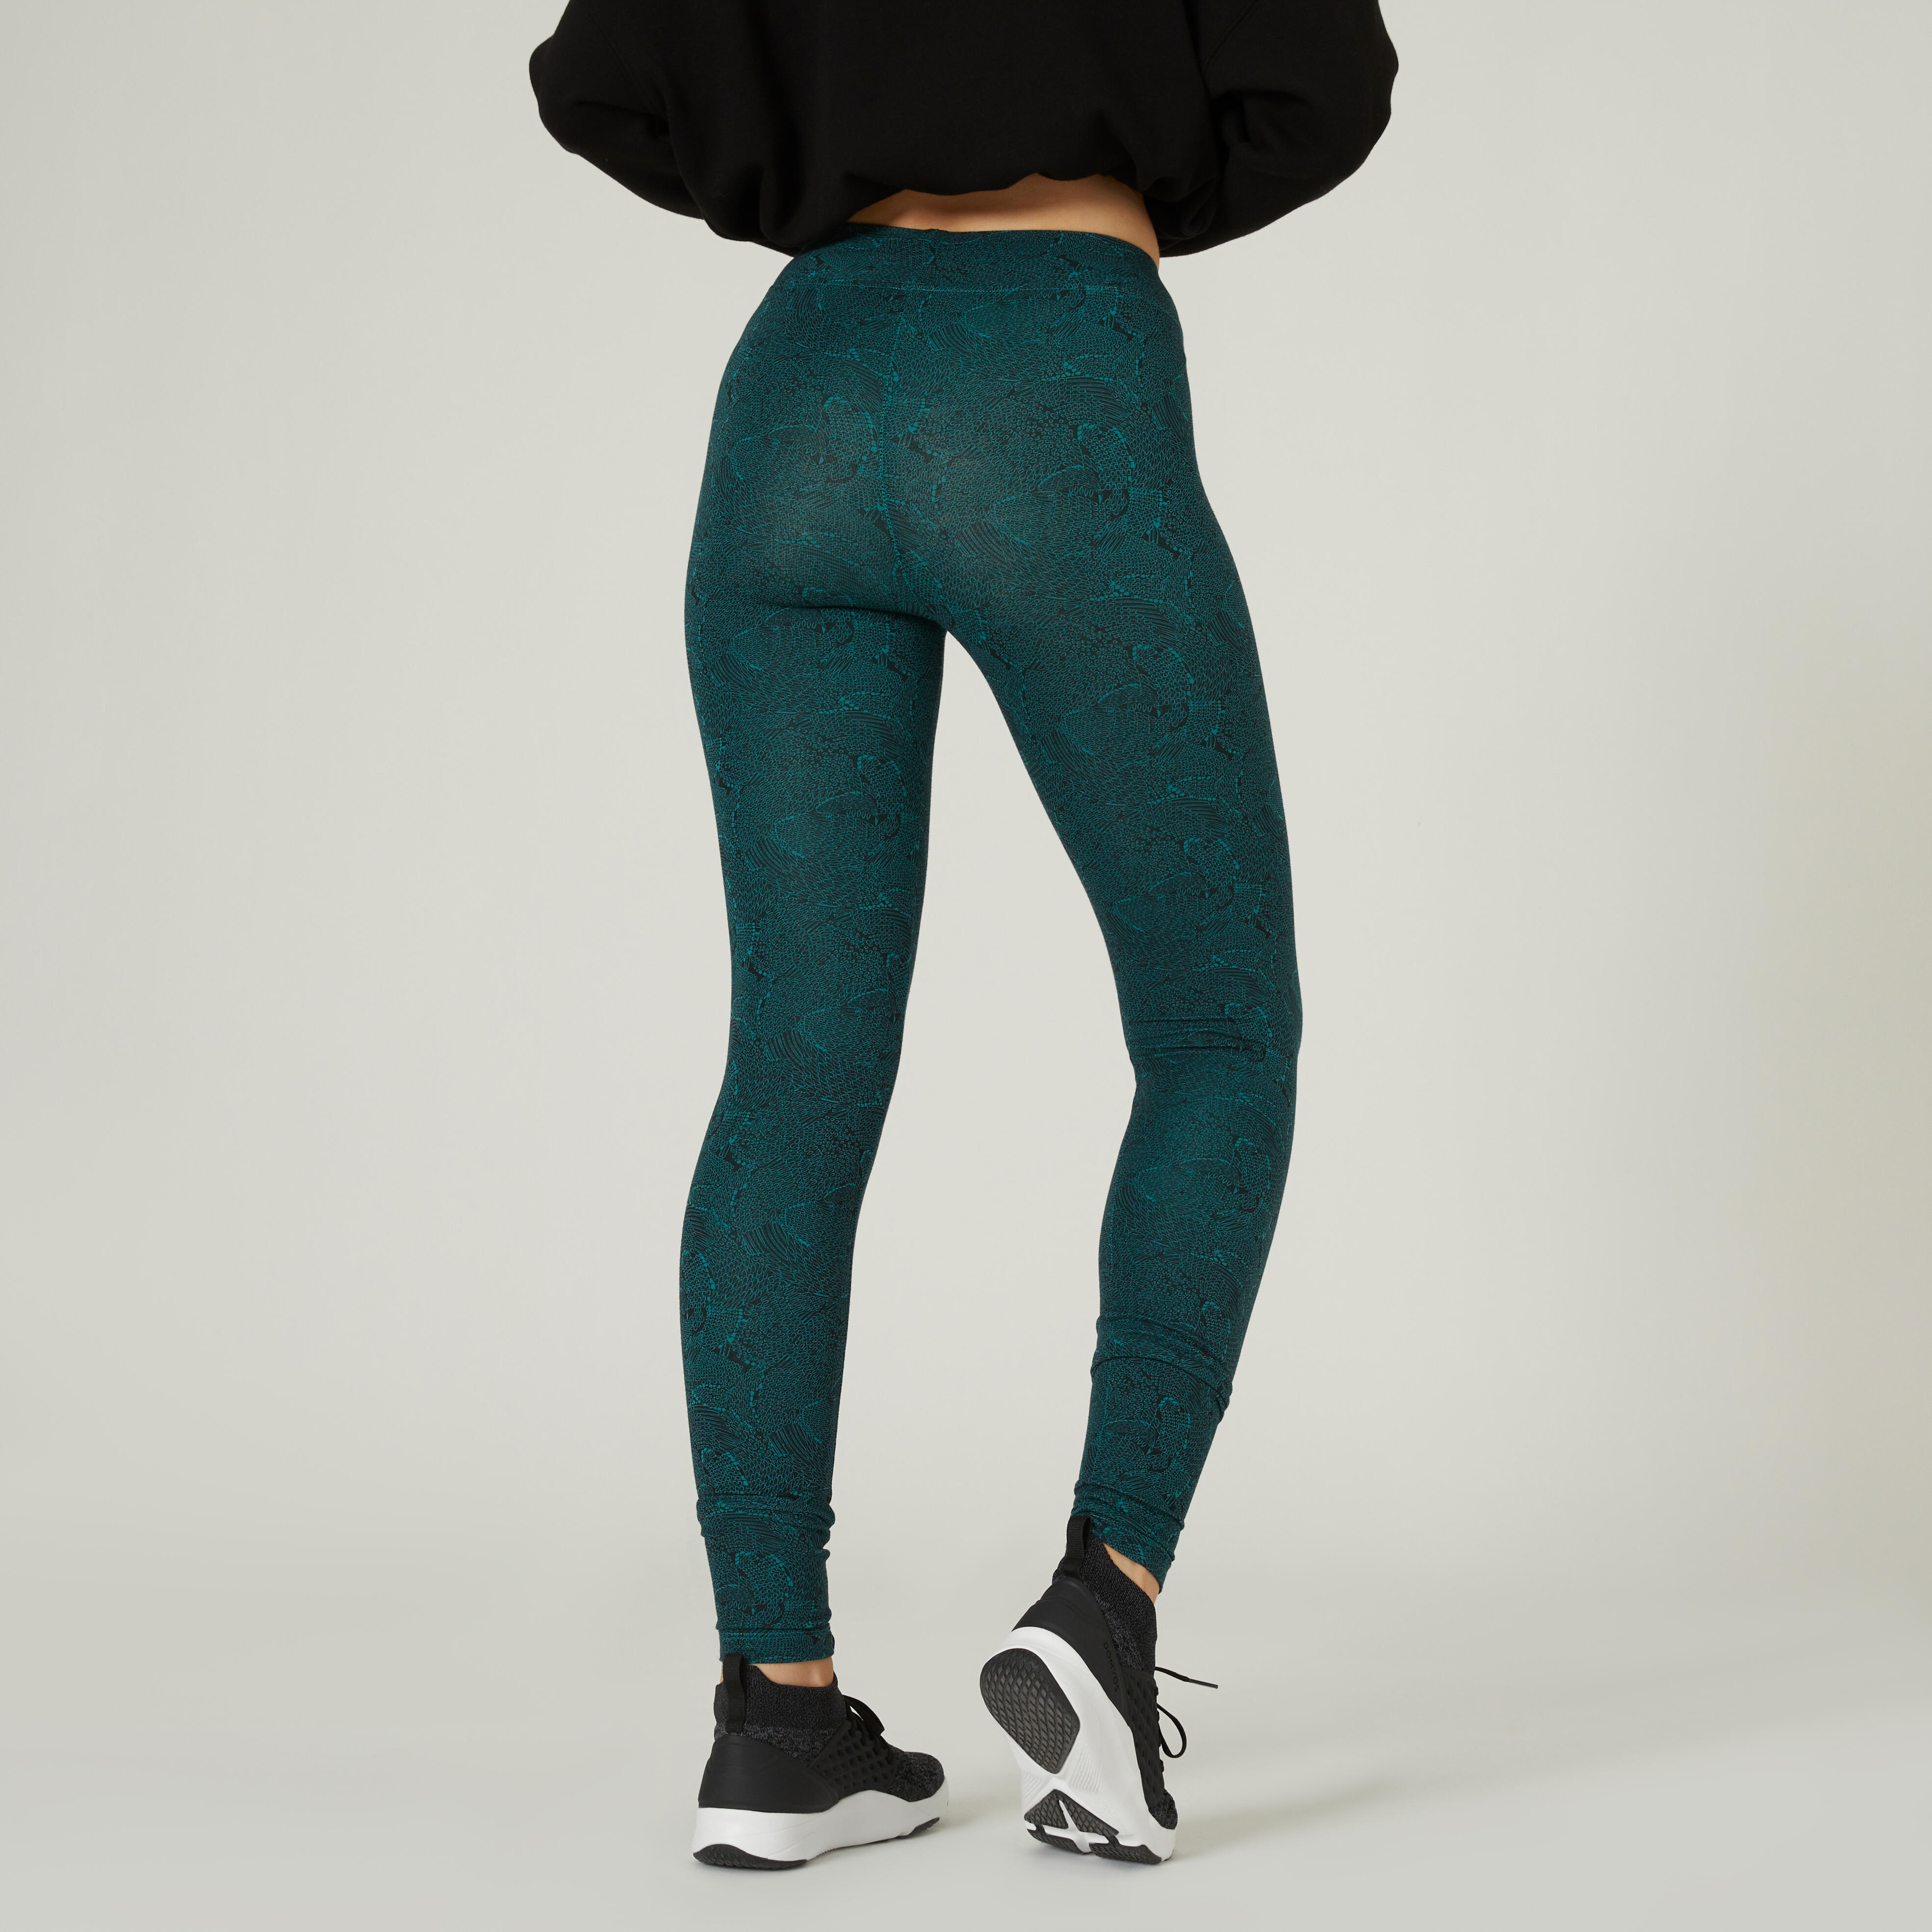 Amazon.com : Emerald Green Shamrocks High Waist Yoga Pants Tummy Control Workout  Leggings for Women S : Sports & Outdoors